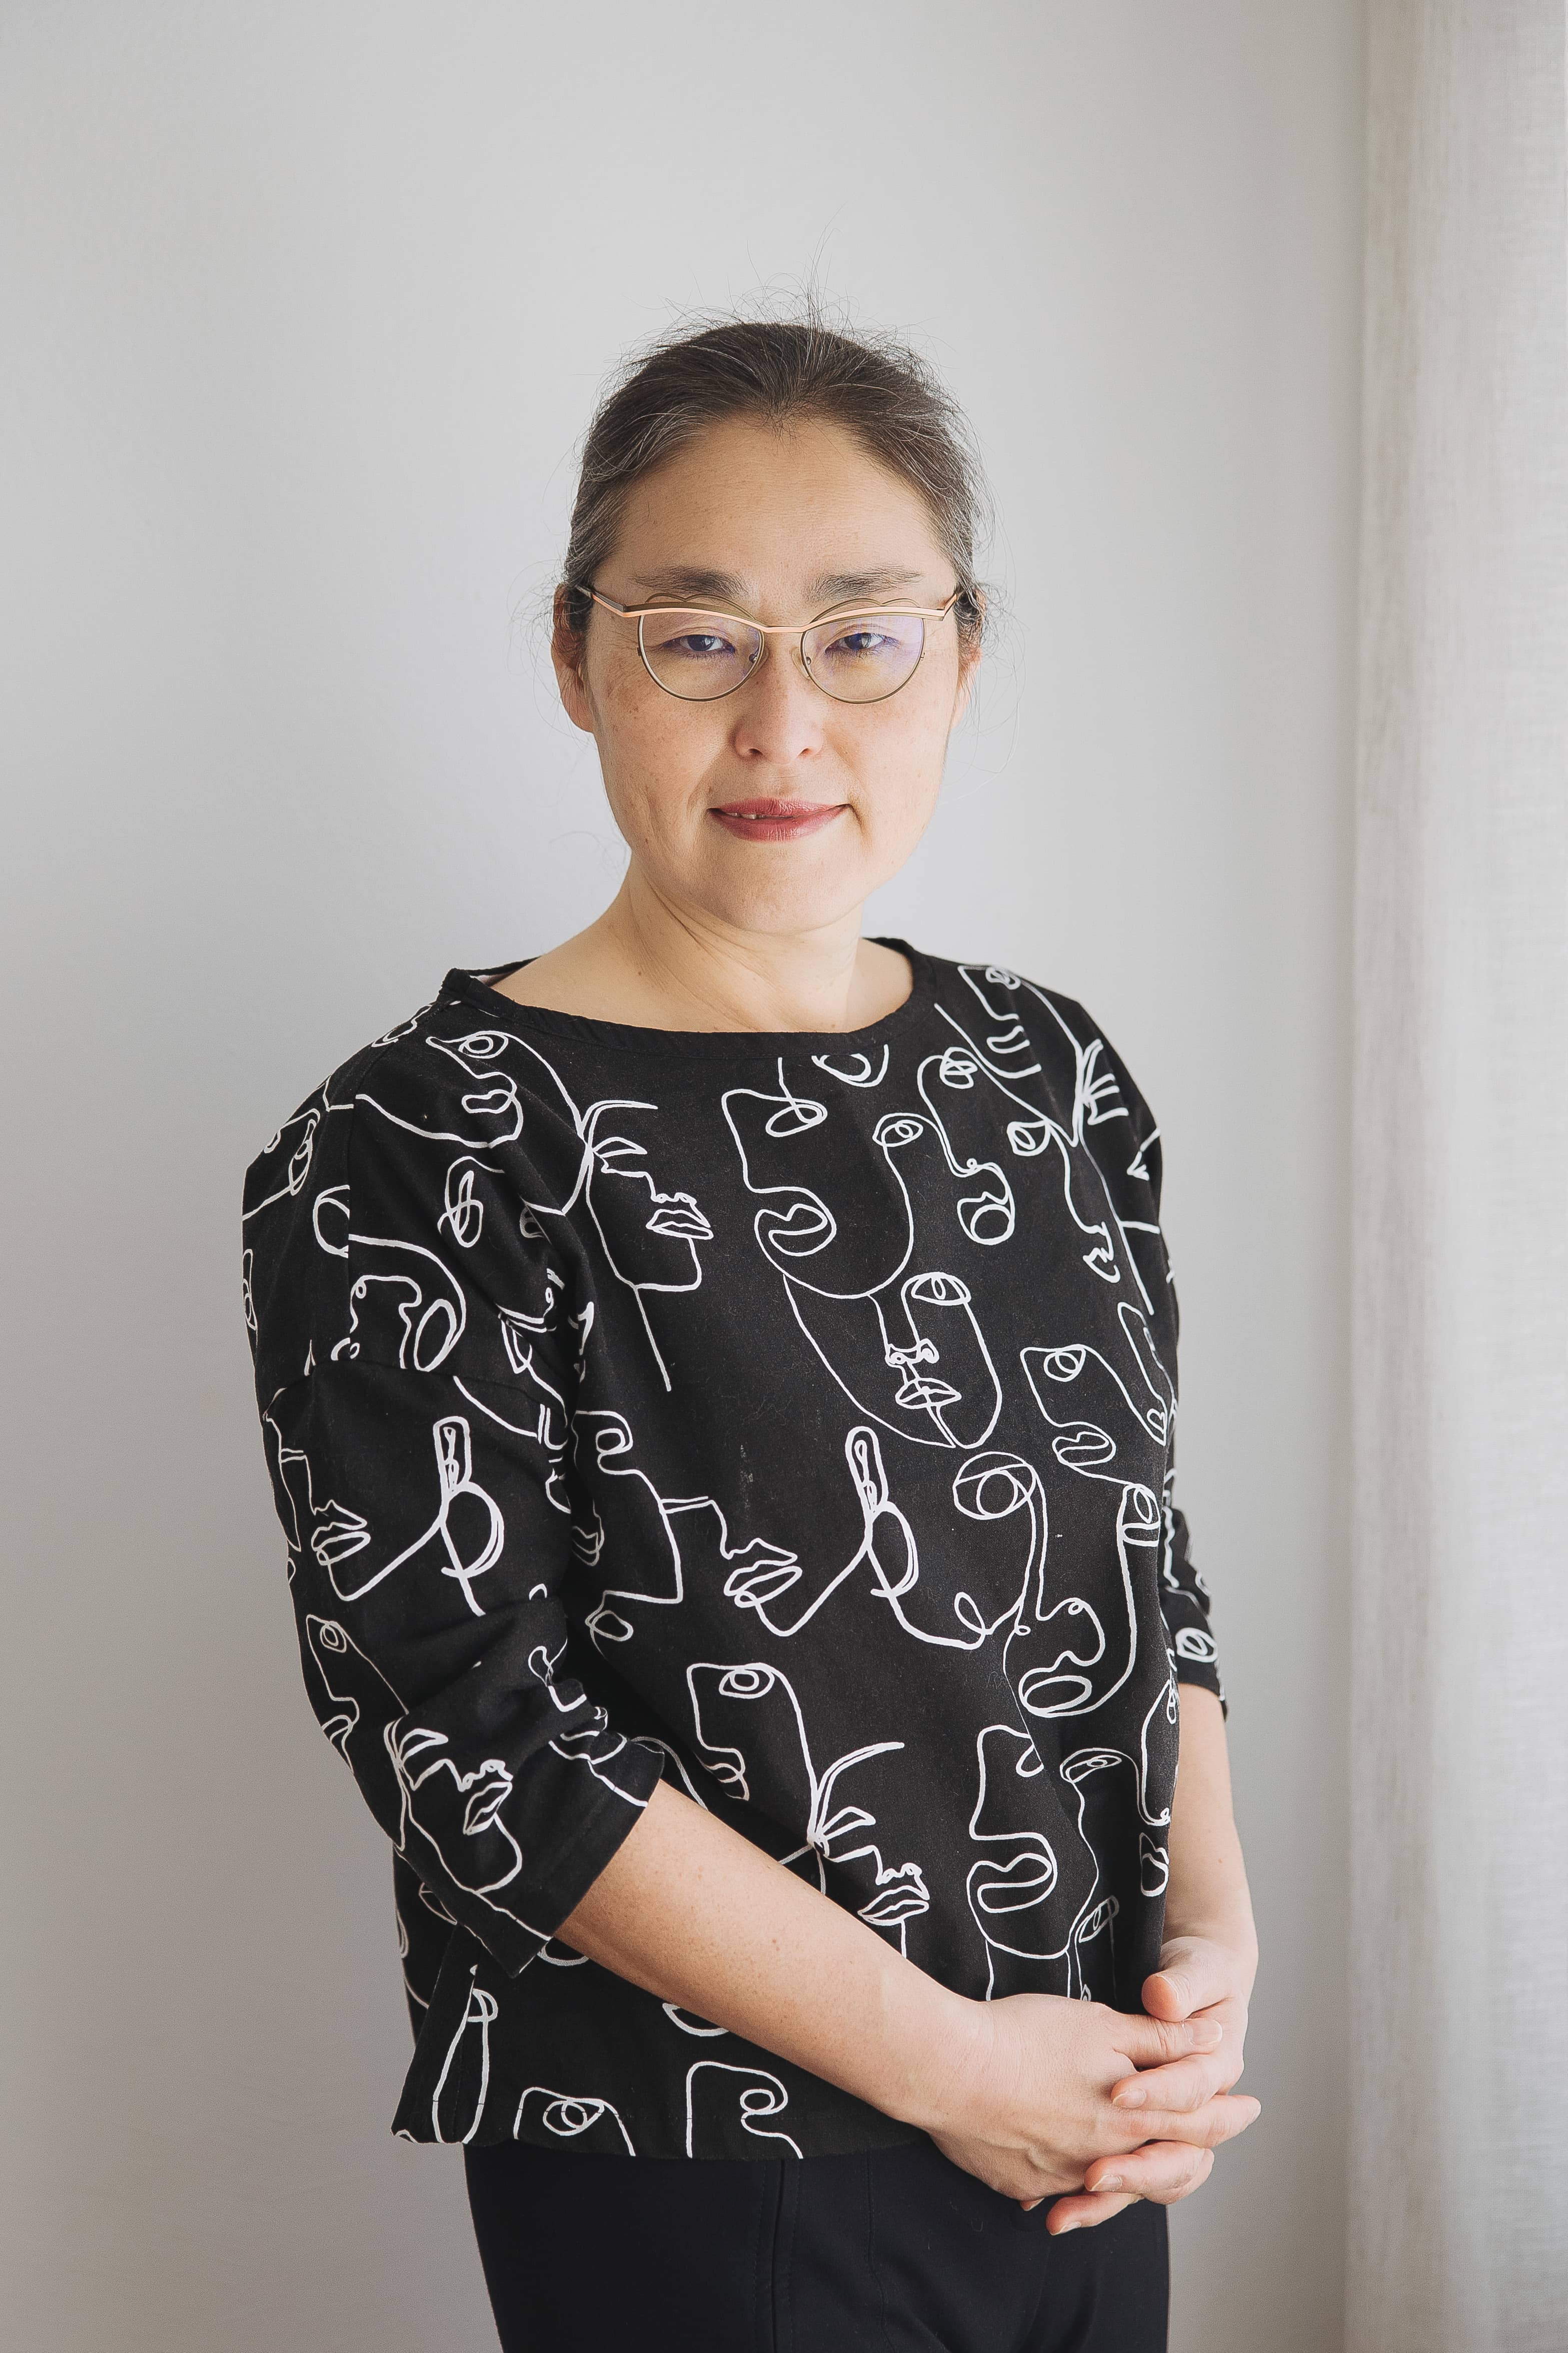 Associate Professor Tomoko Sugiura